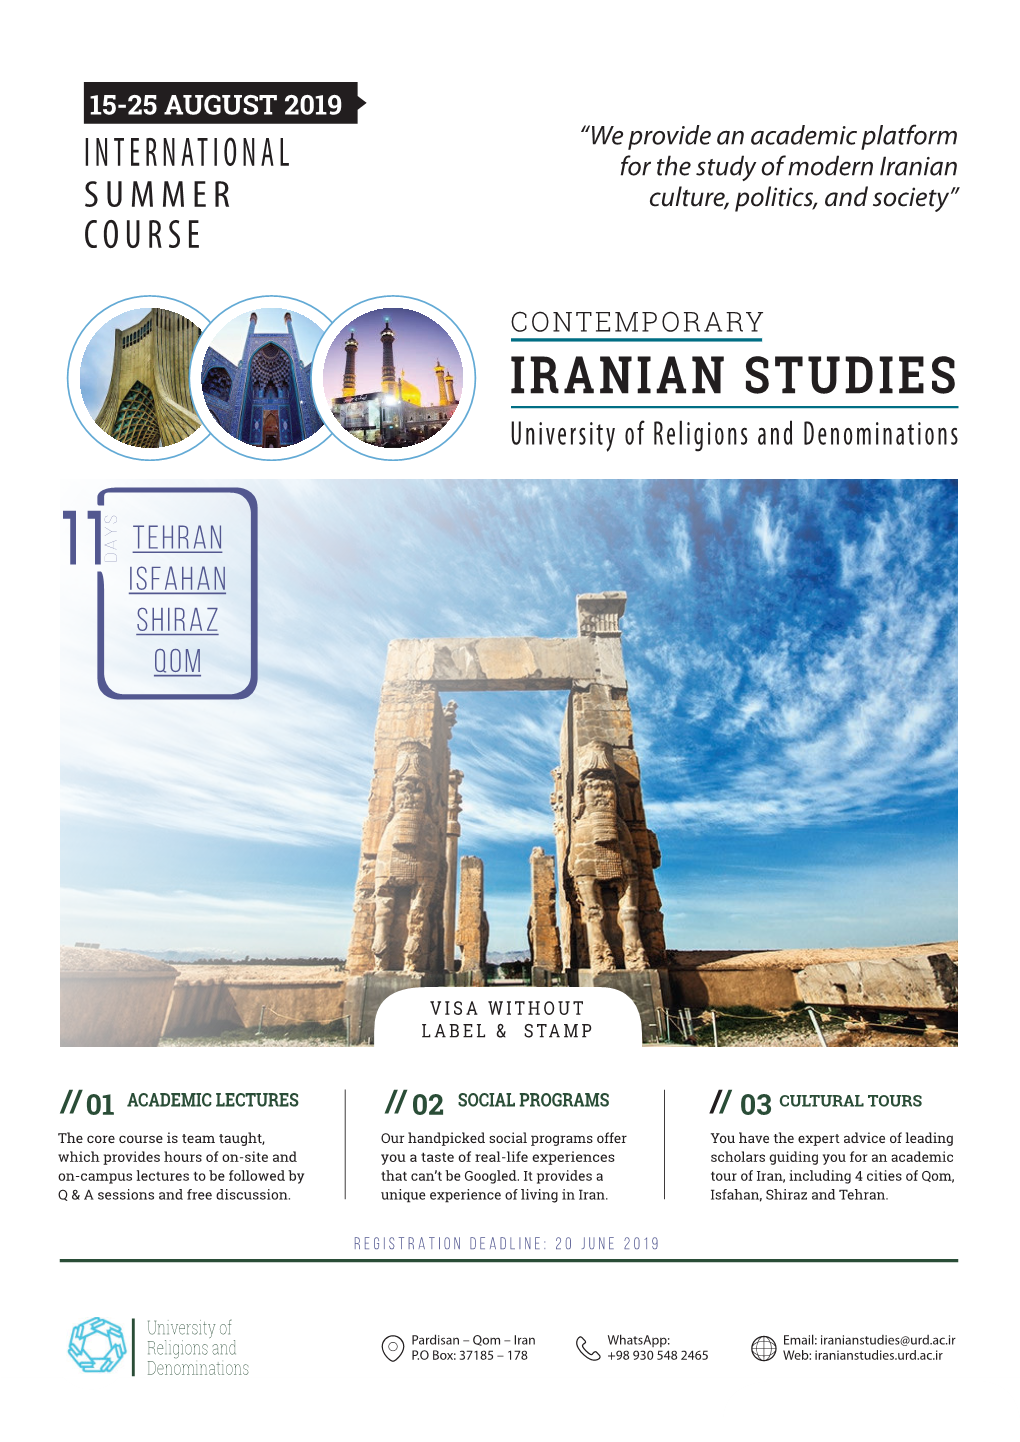 IRANIAN STUDIES University of Religions and Denominations